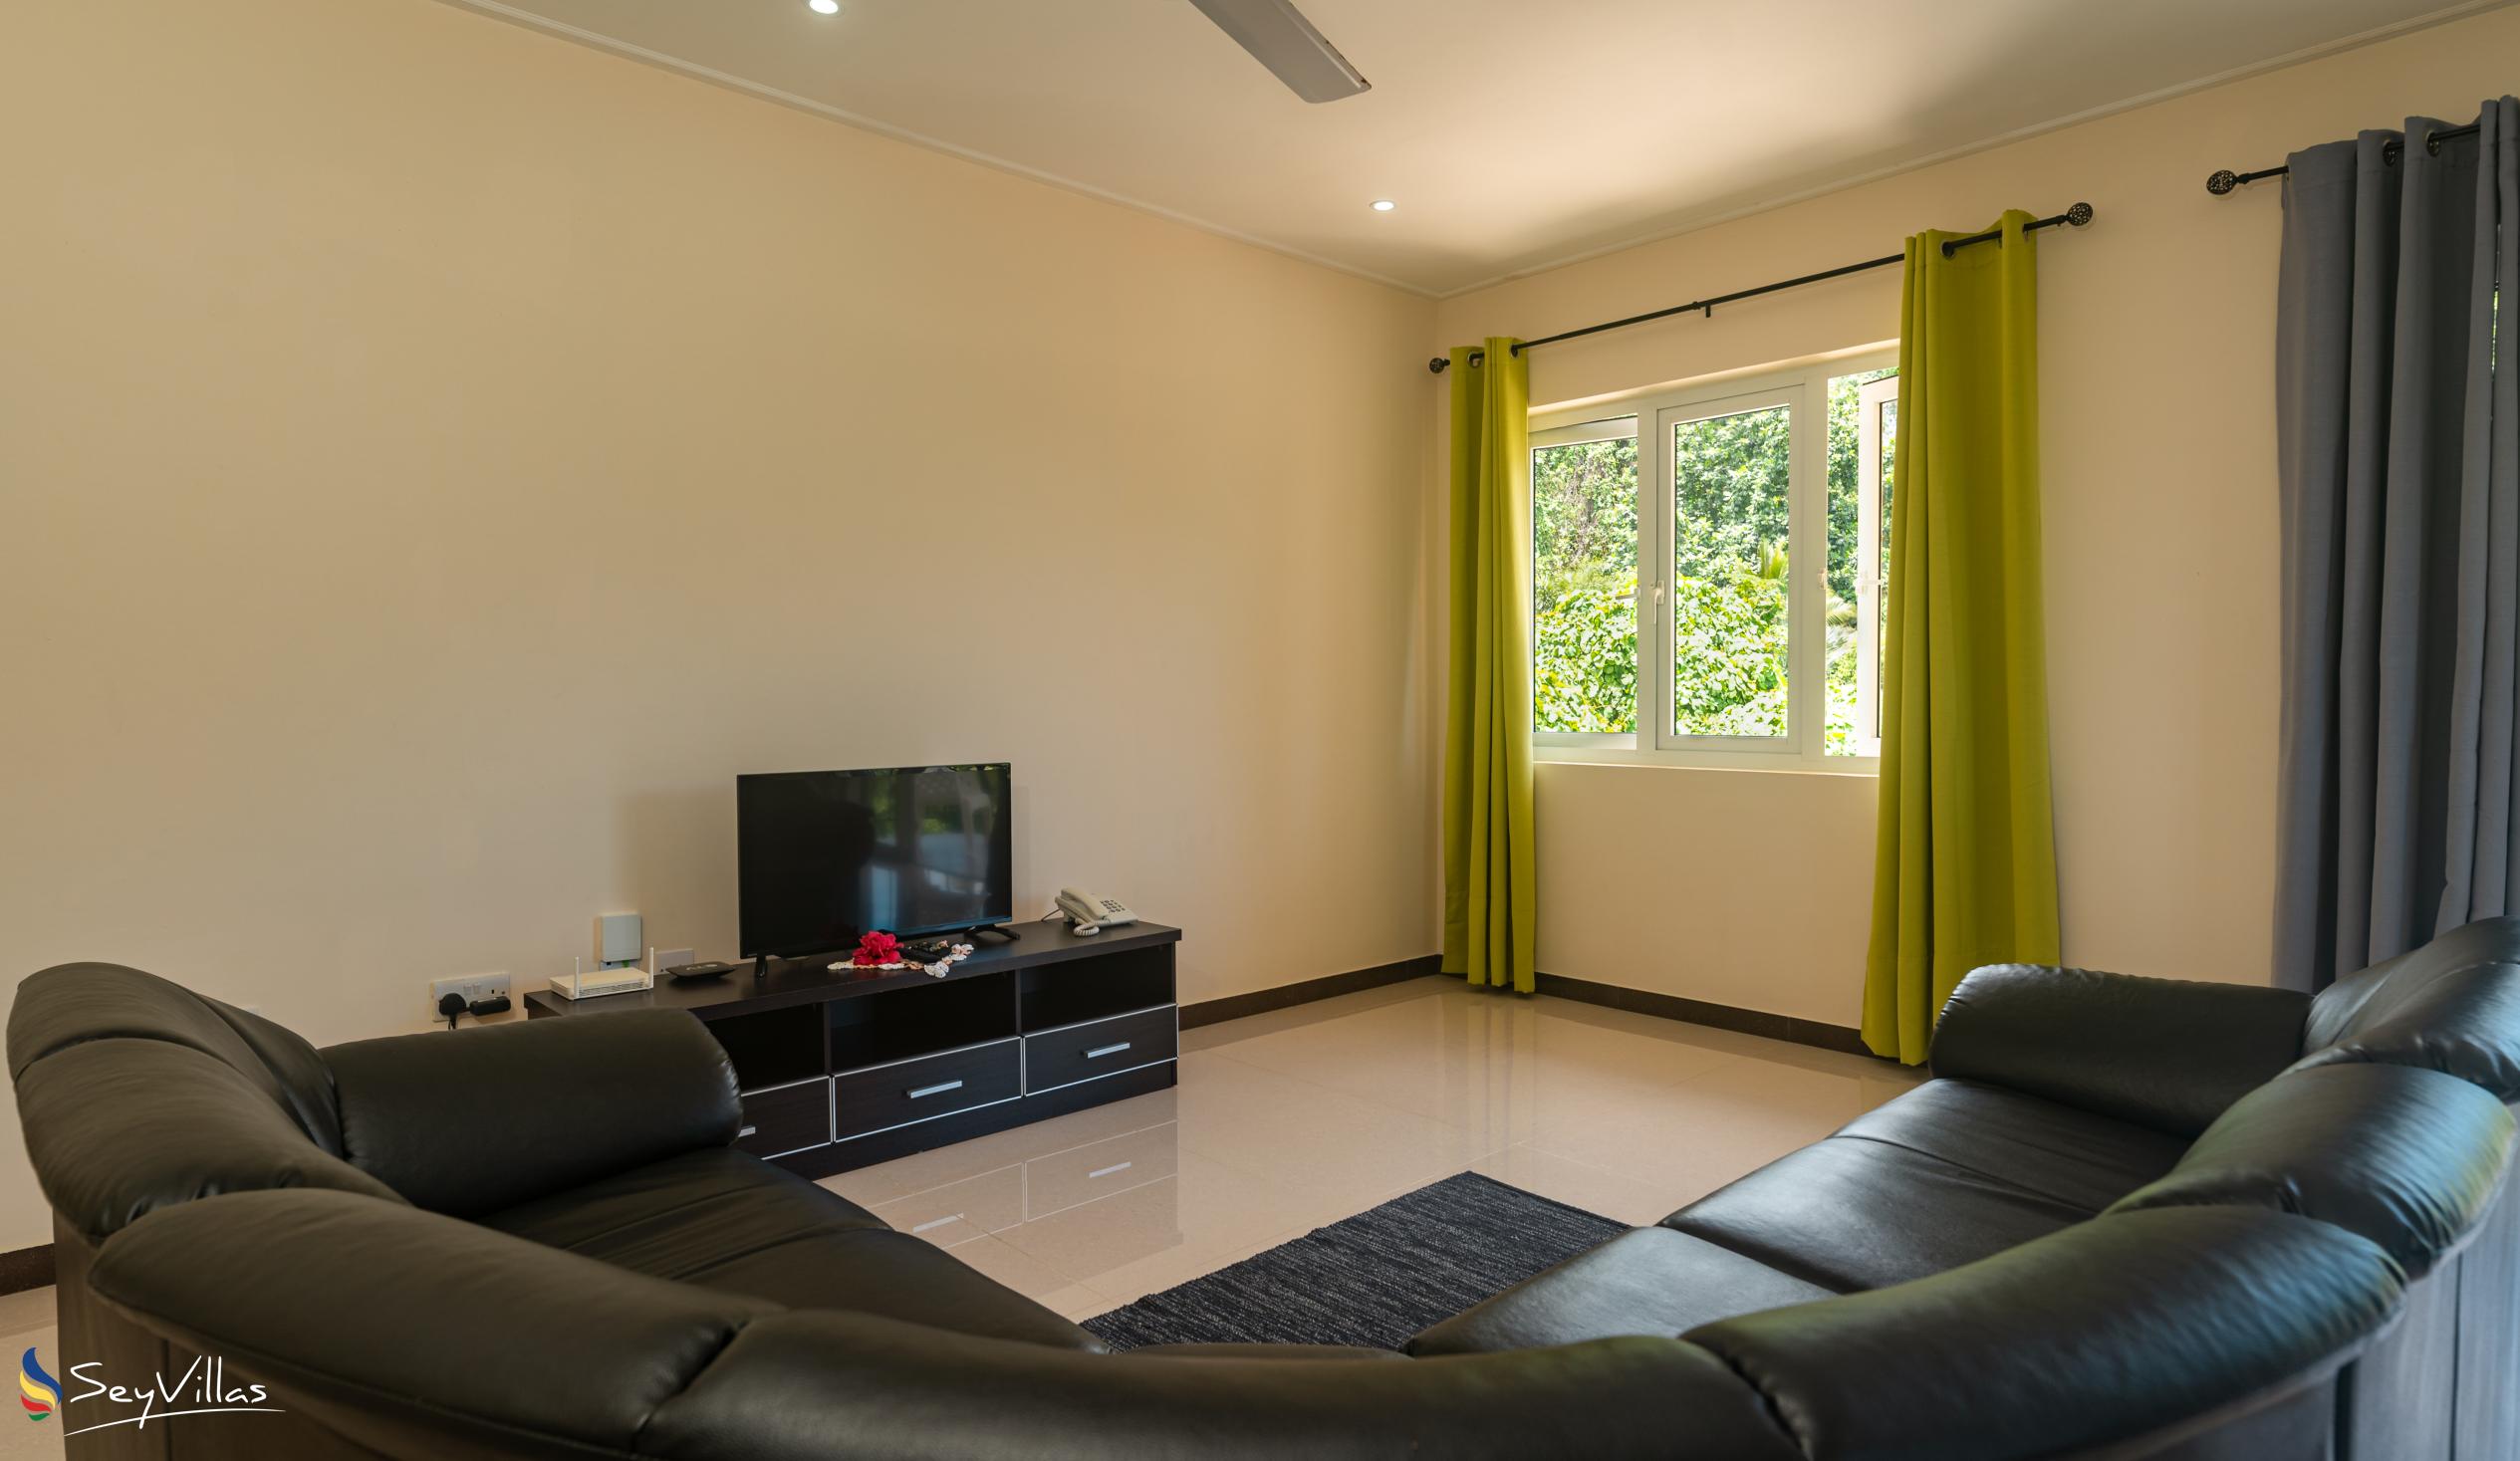 Foto 43: JAIDSS Holiday Apartments - Appartamento con 2 camere - Mahé (Seychelles)